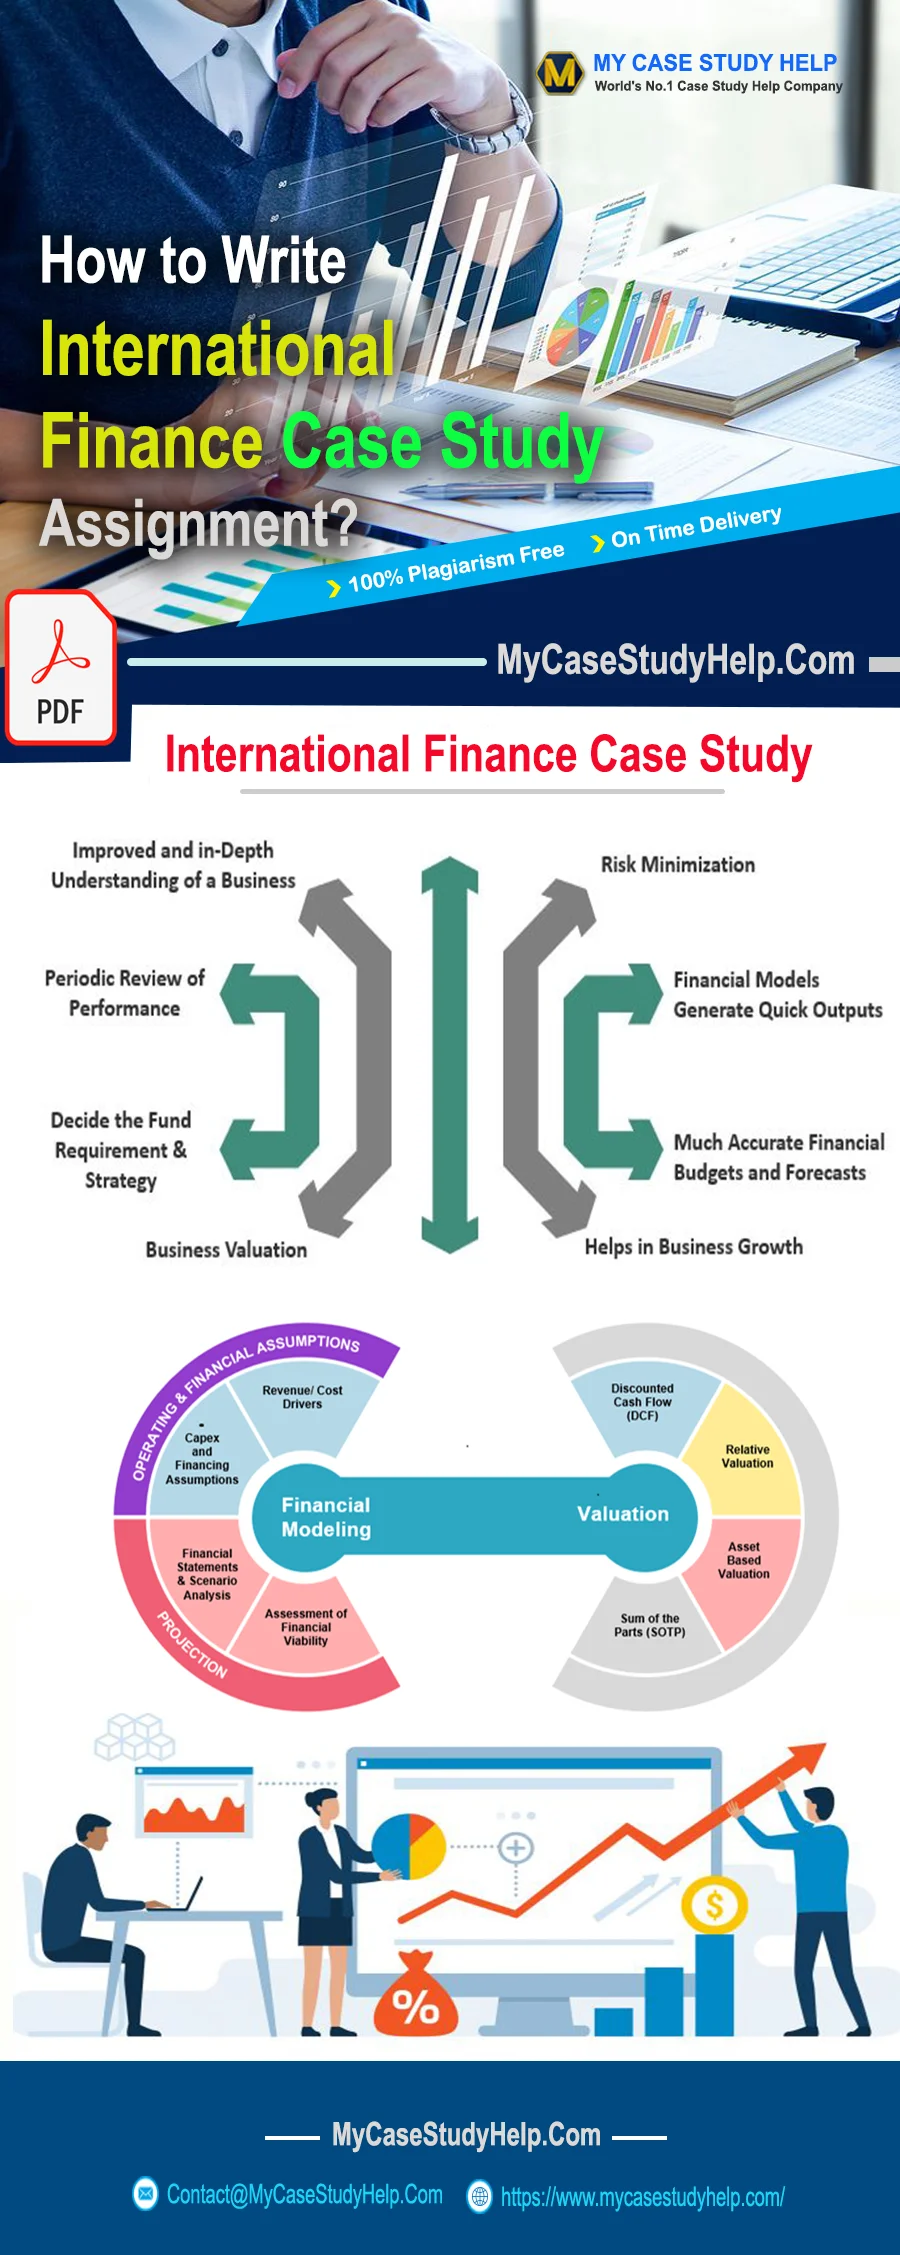 How To Write An International Finance Case Study Assignment?